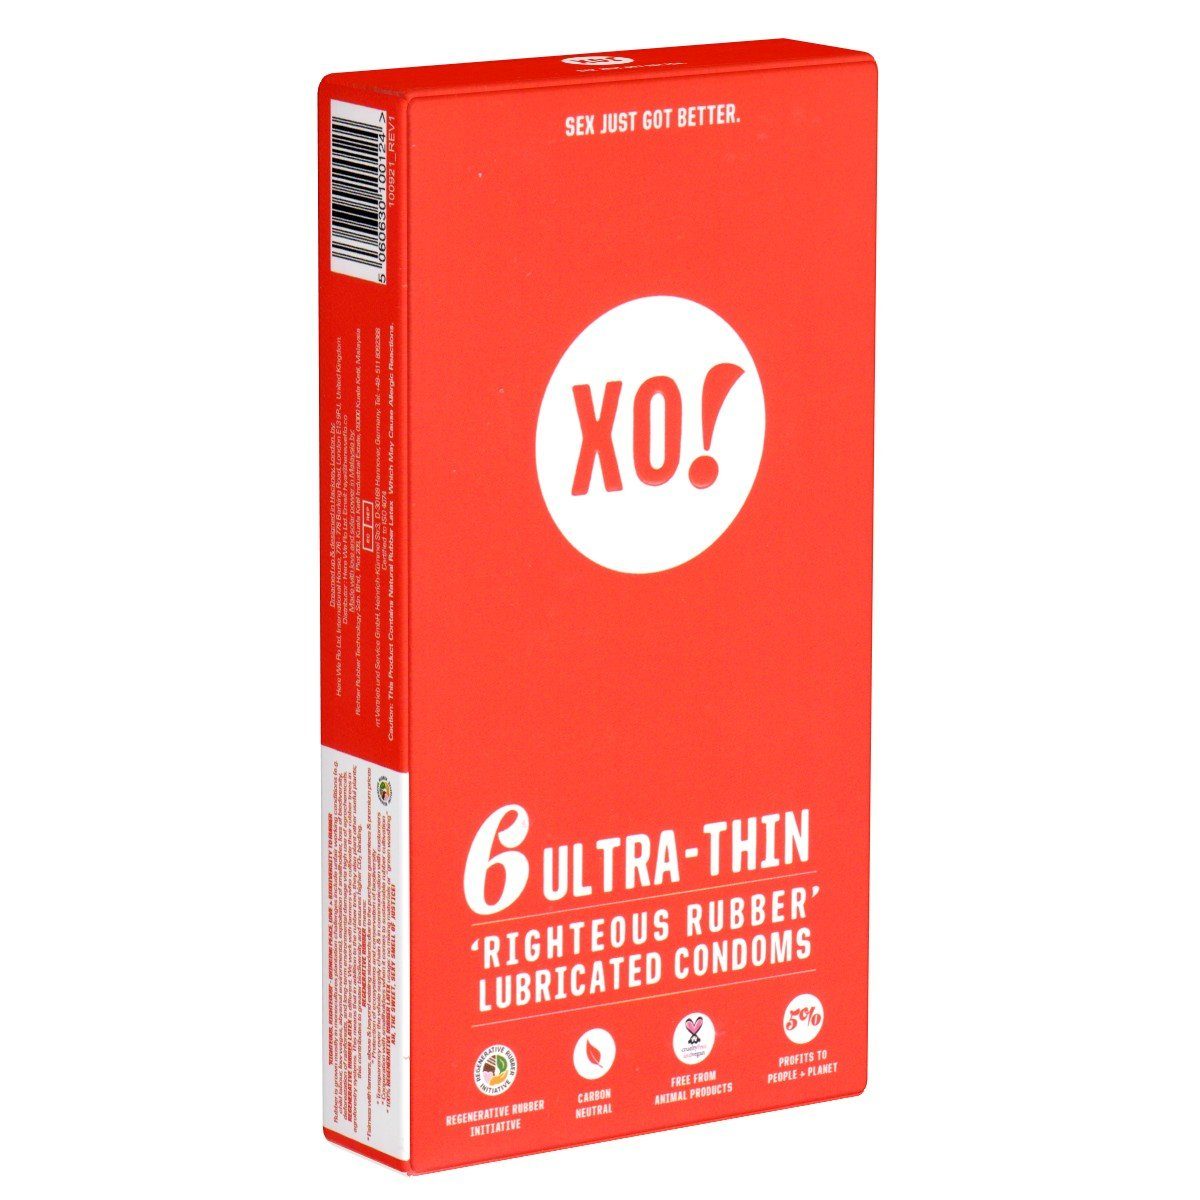 XO Kondome Ultra Thin biologisch vegane, 6 gefühlsechte mit, St., Packung Kondome -, dünne, abbaubare Kondome